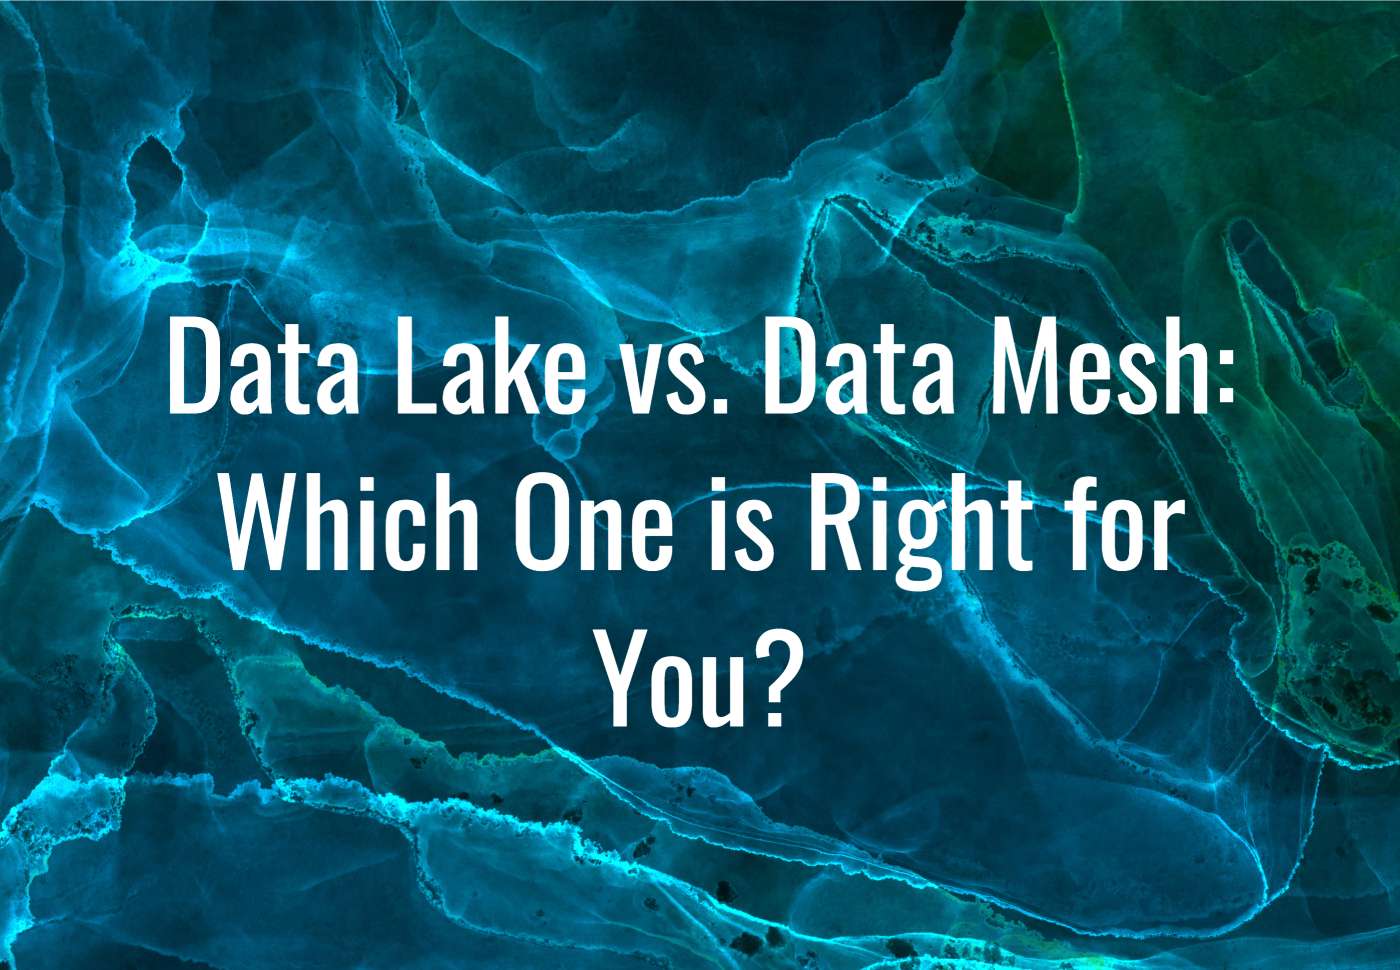 Data Lake vs Data Mesh